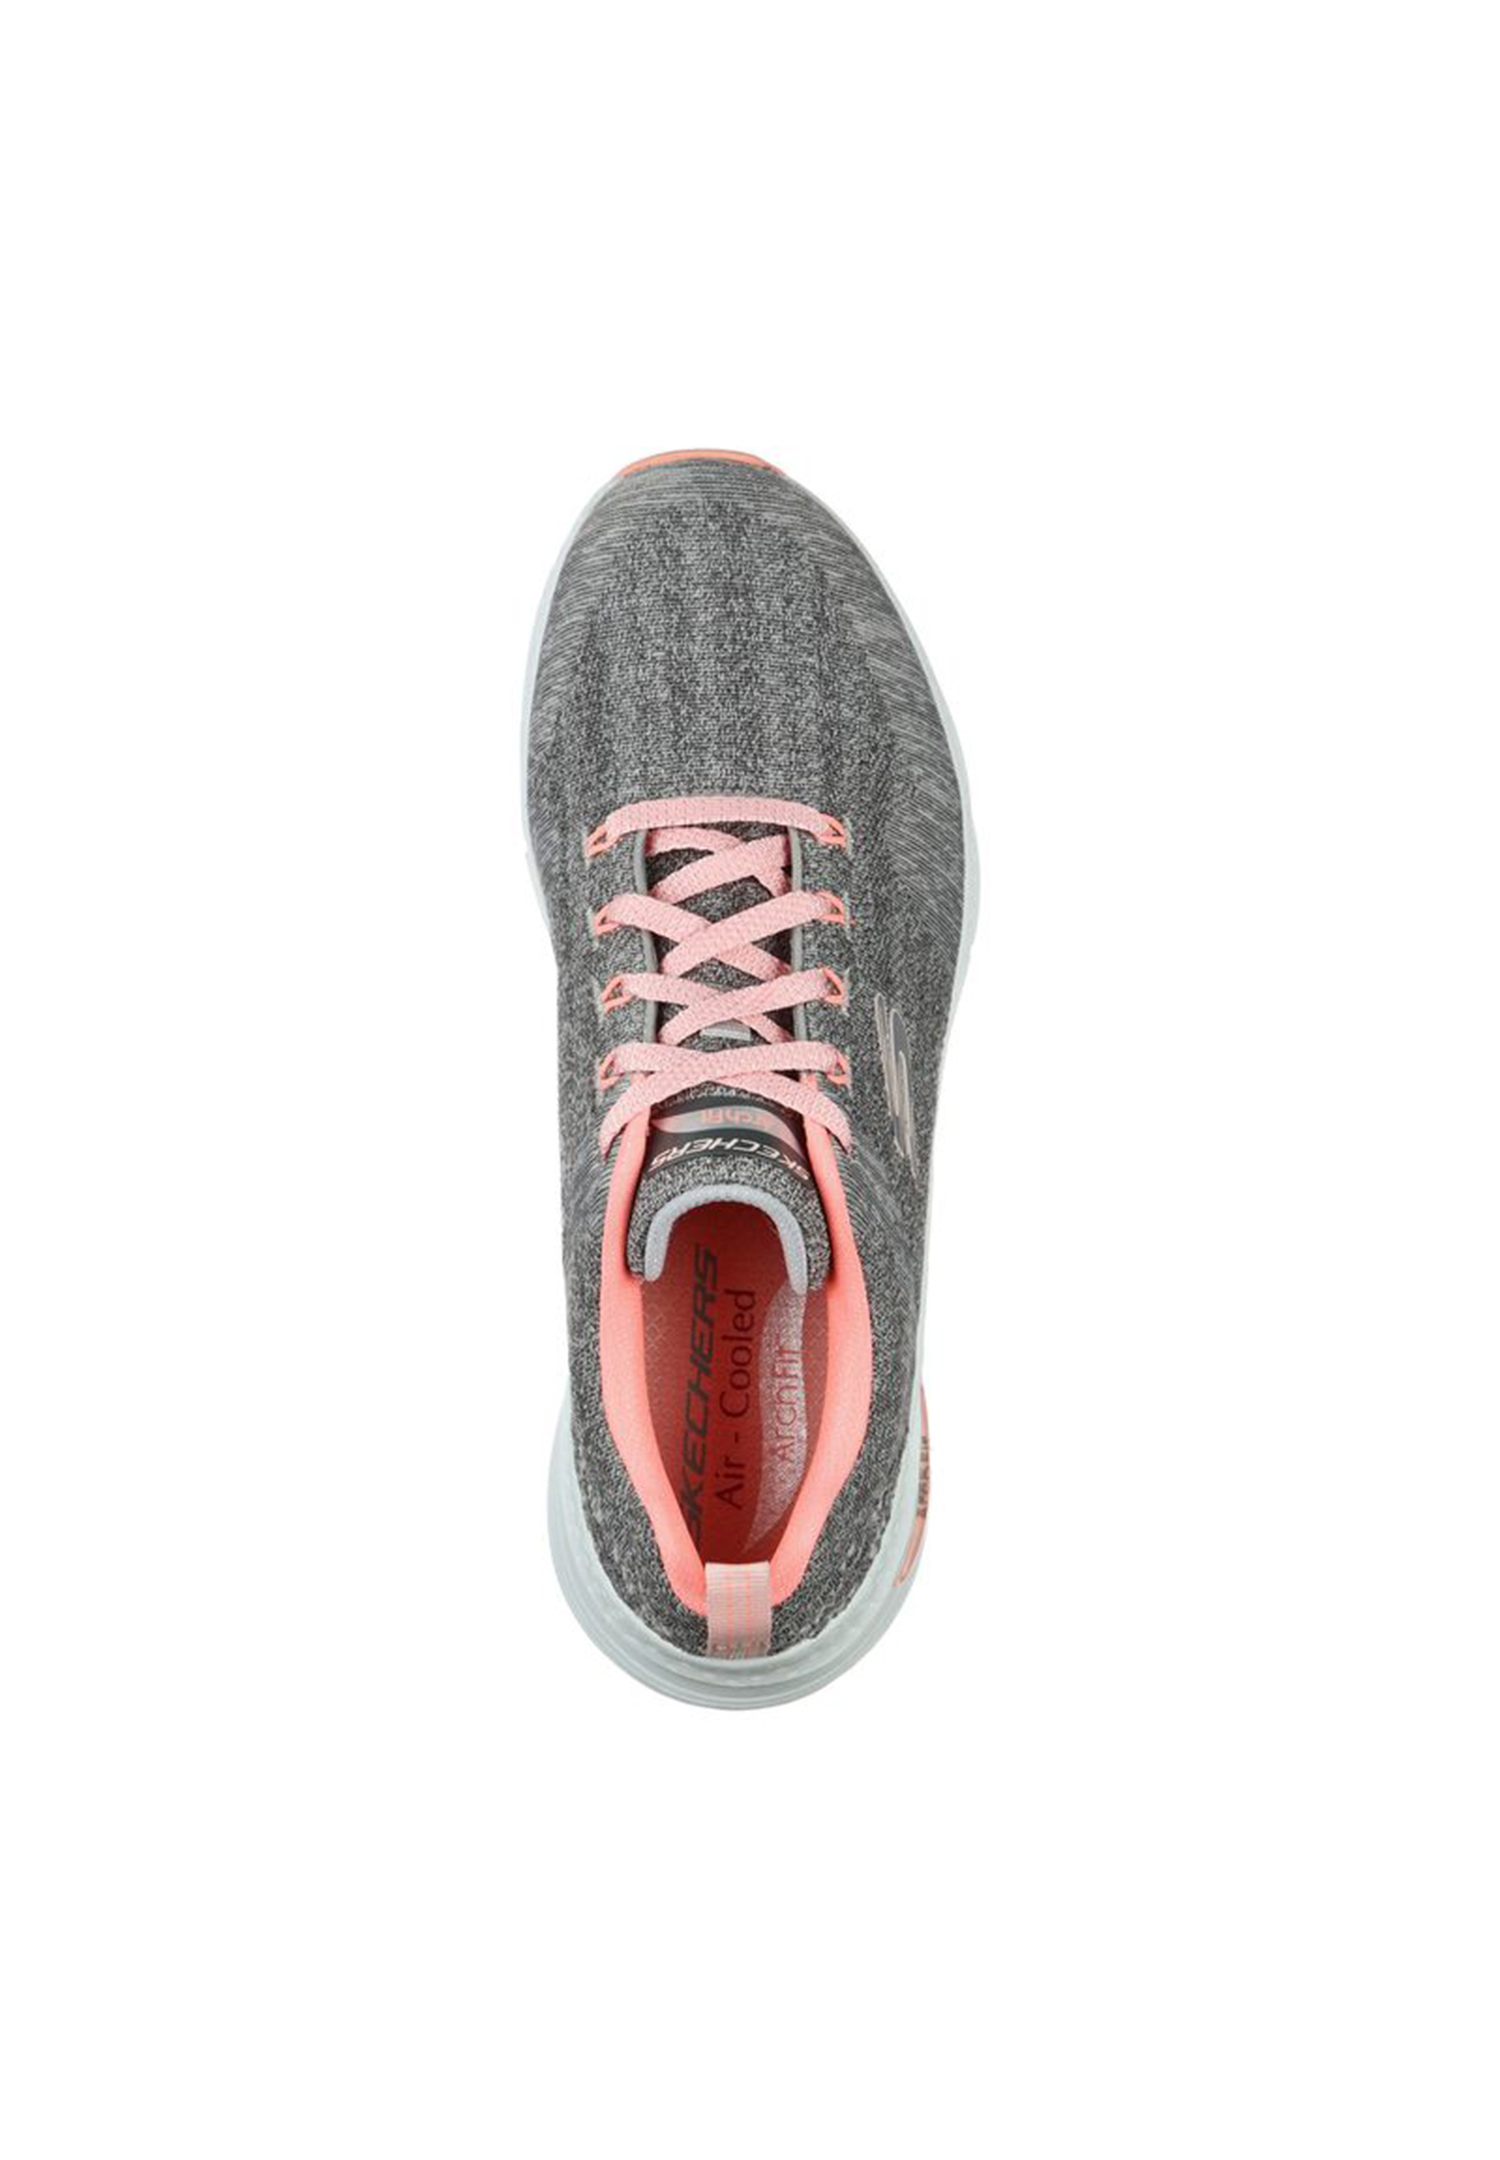 Skechers SPORT WOMENS ARCH FIT COMFY WAVE Sneakers Damen 149414/GYPK grau/pink